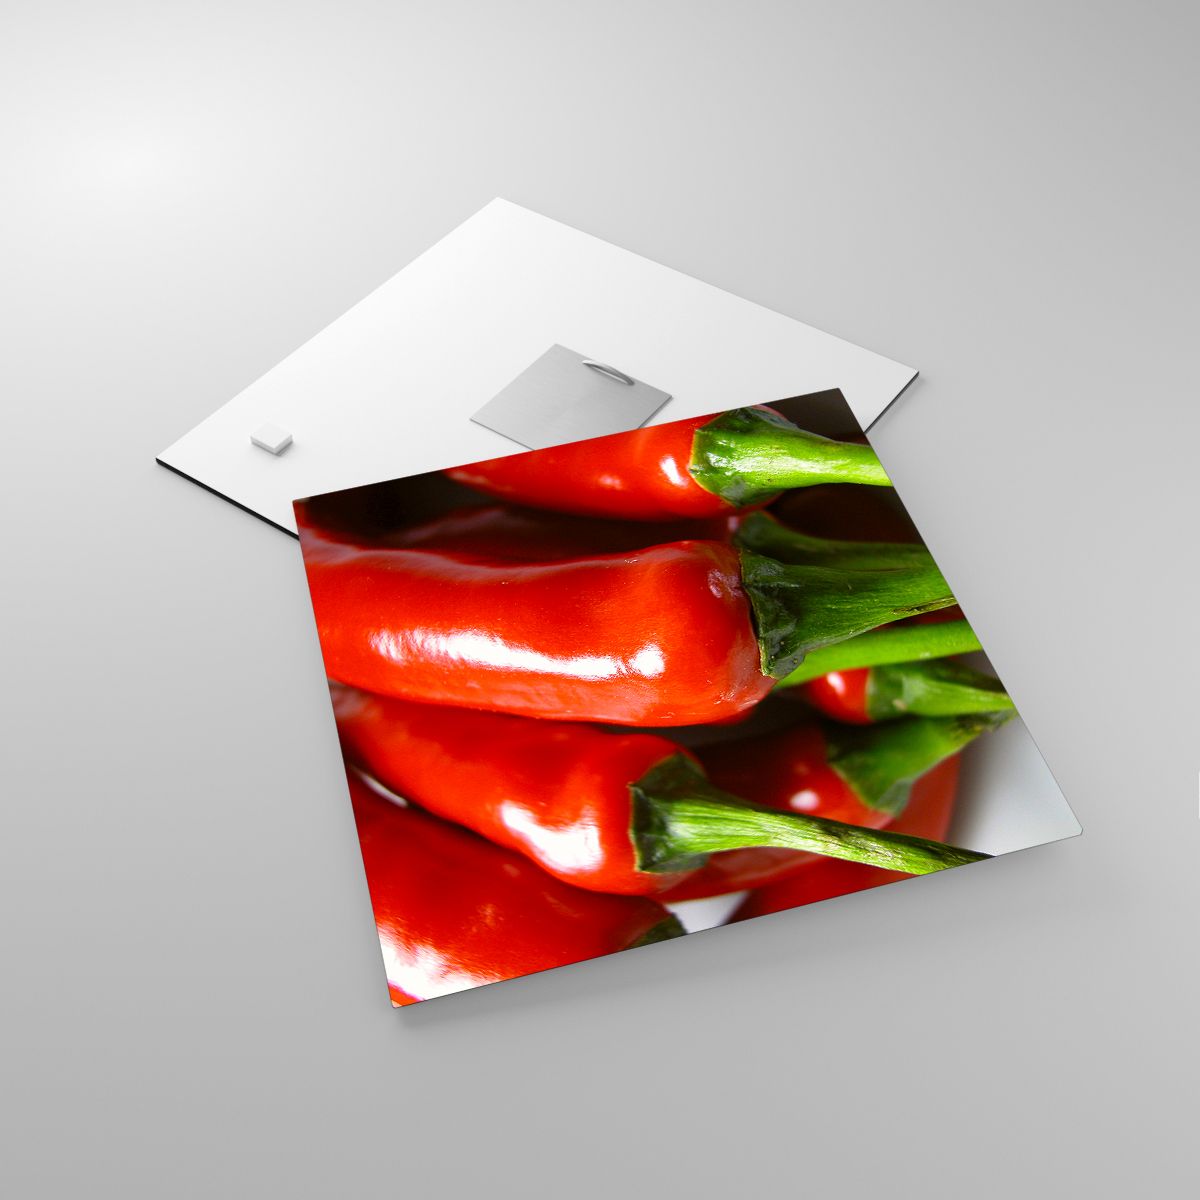 Glasbild Gastronomie, Glasbild Pfeffer, Glasbild Gemüse, Glasbild Chili, Glasbild Kulinarisch